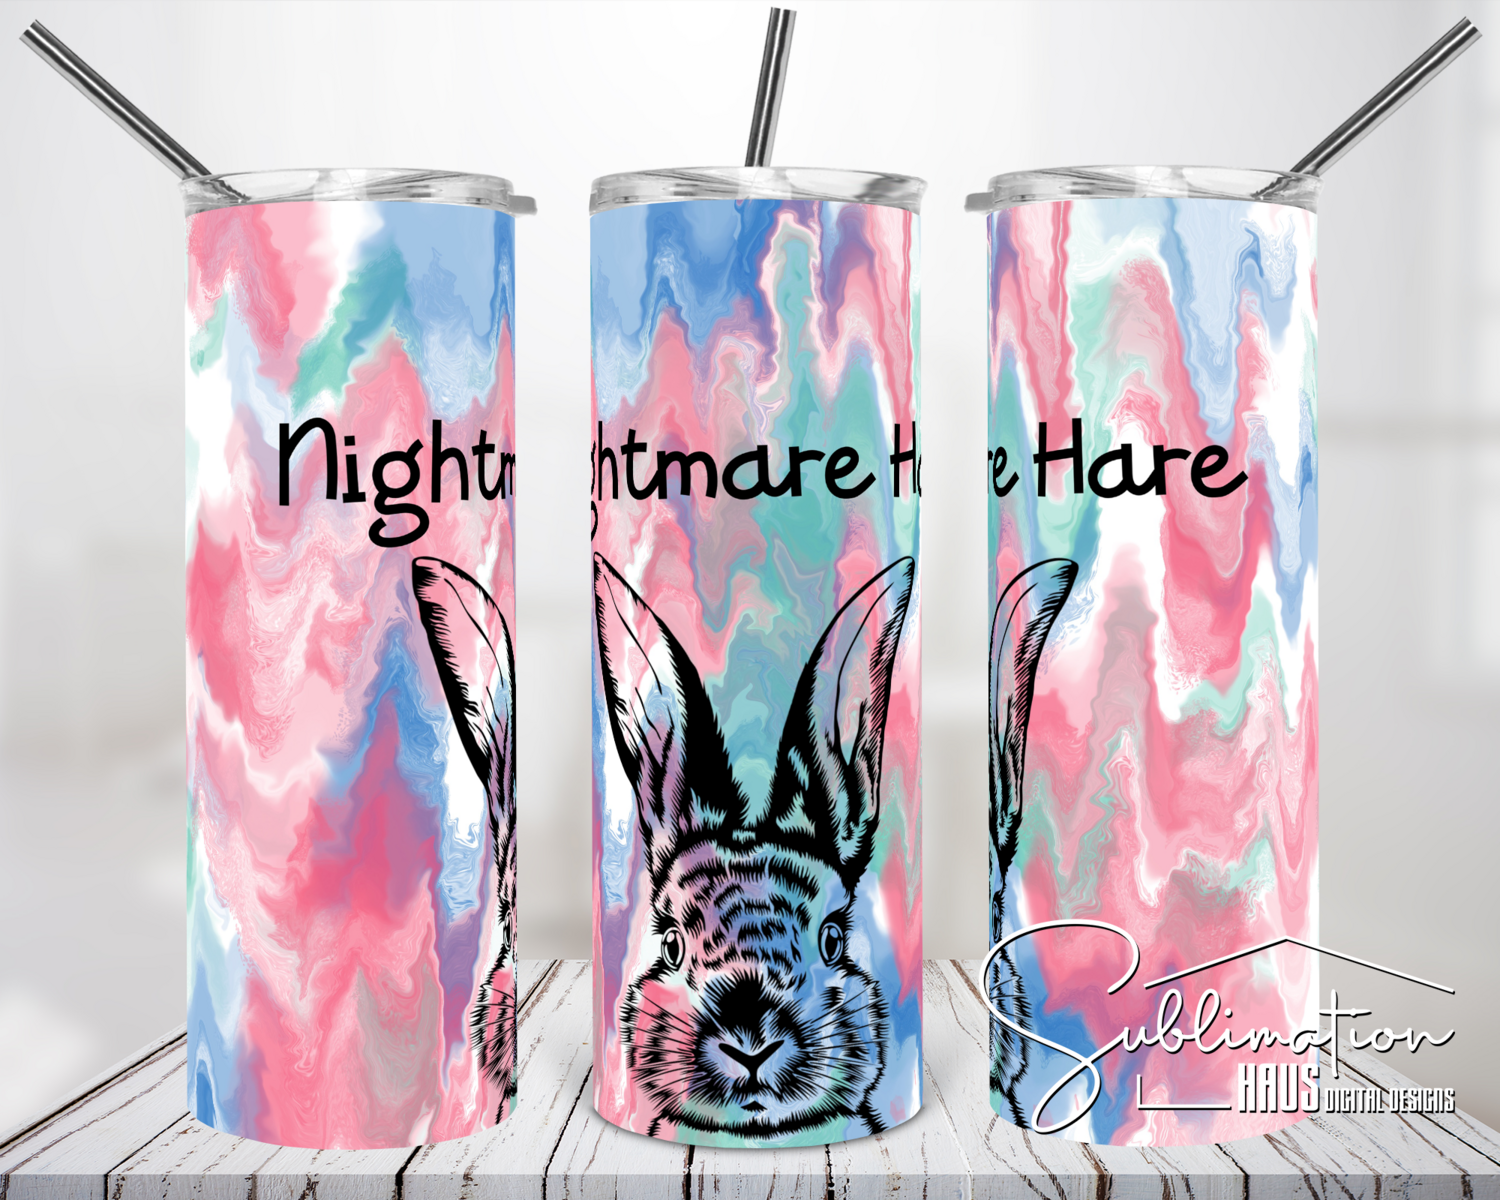 Spring Pour - Nightmare Hare- 20oz Tumbler Design